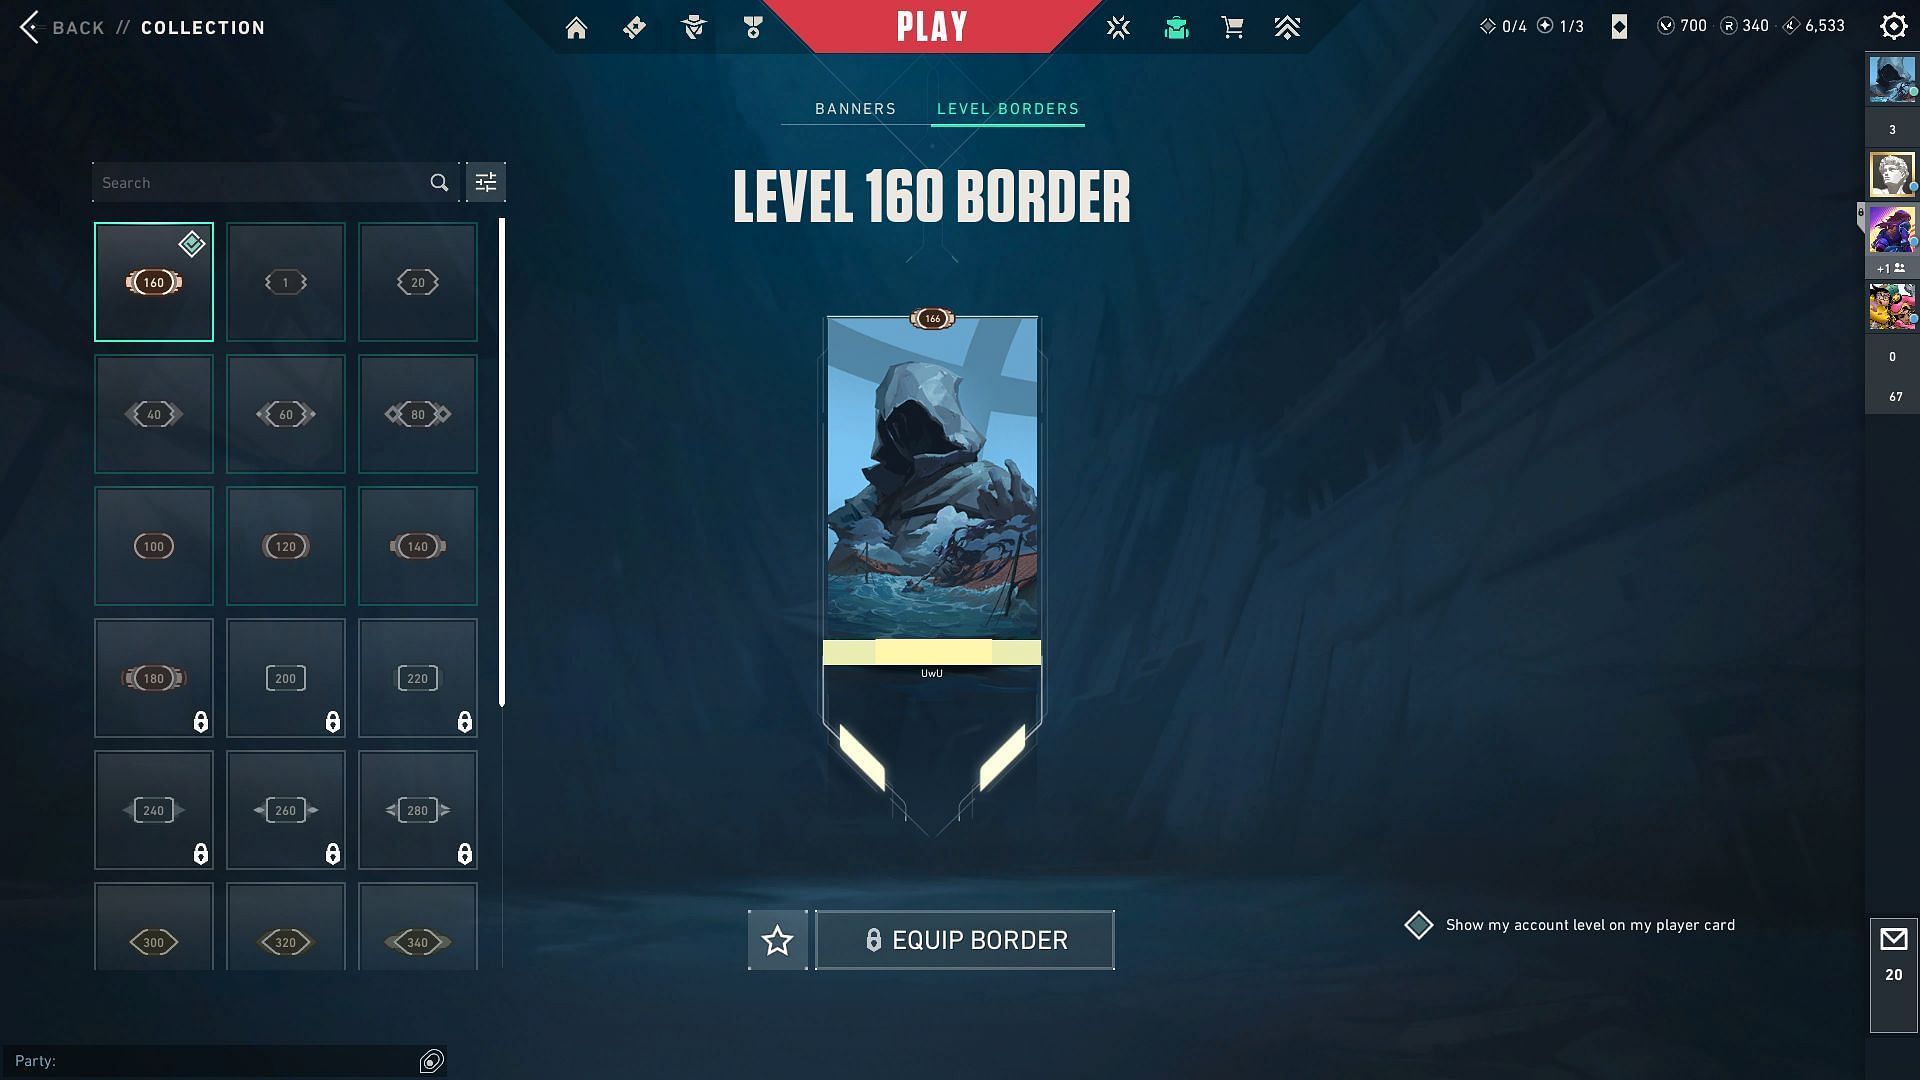 Level borders in Valorant (Image via Riot Games)